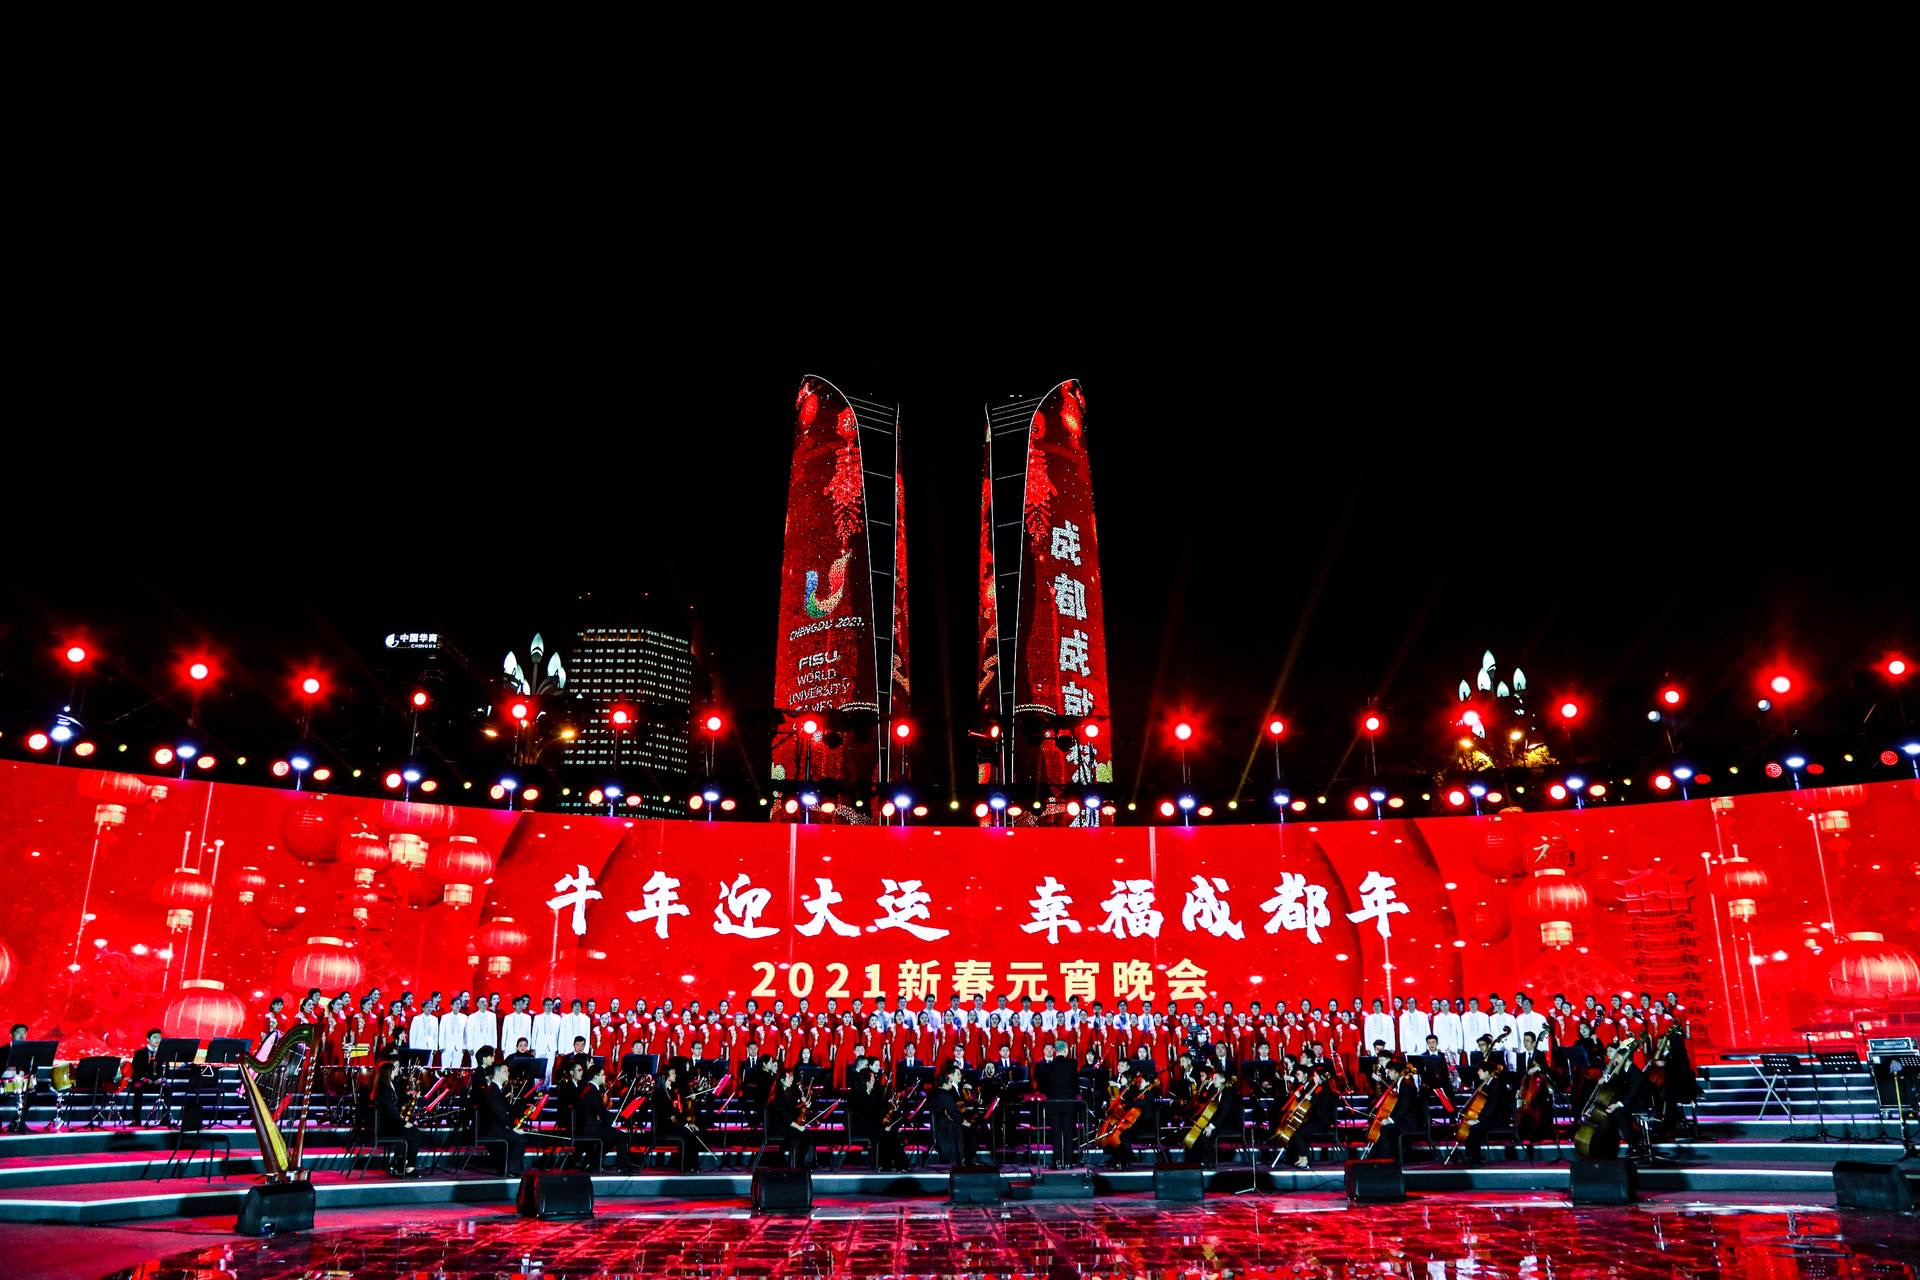 Chengdu 2021 has hosted a Chinese New Year gala ©Chengdu 2021